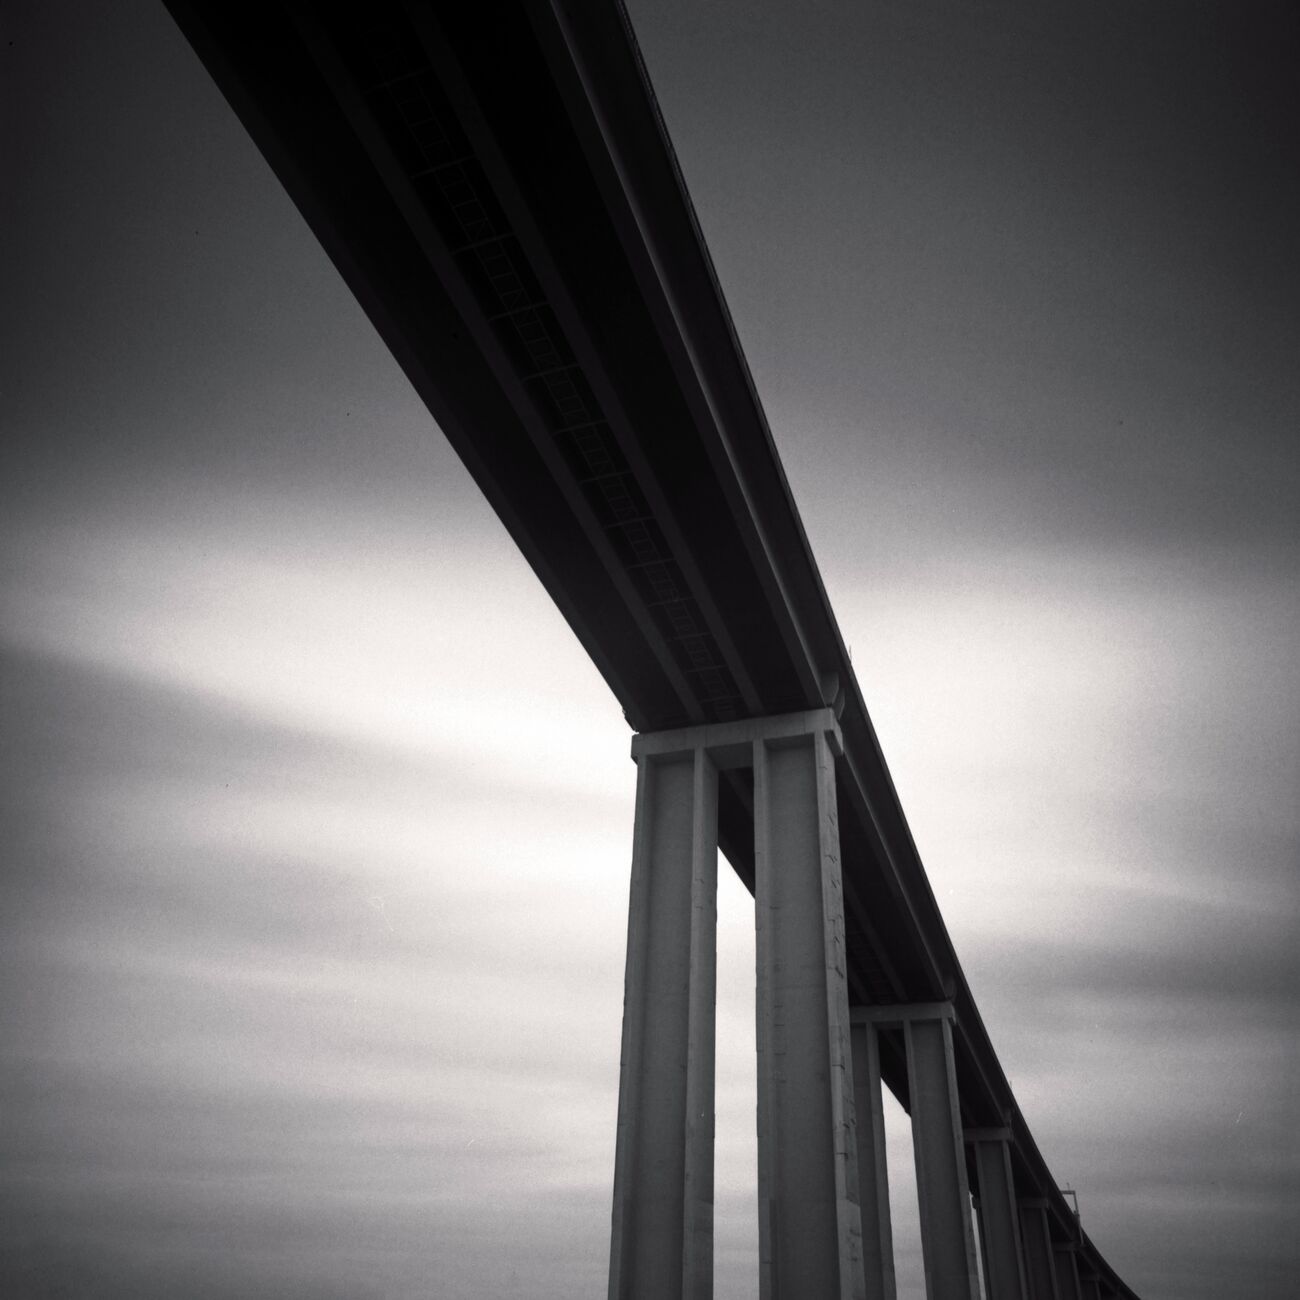 Saint-Nazaire Bridge, Etude 3, Trignac, France. February 2021. Ref-11475 - Denis Olivier Photography